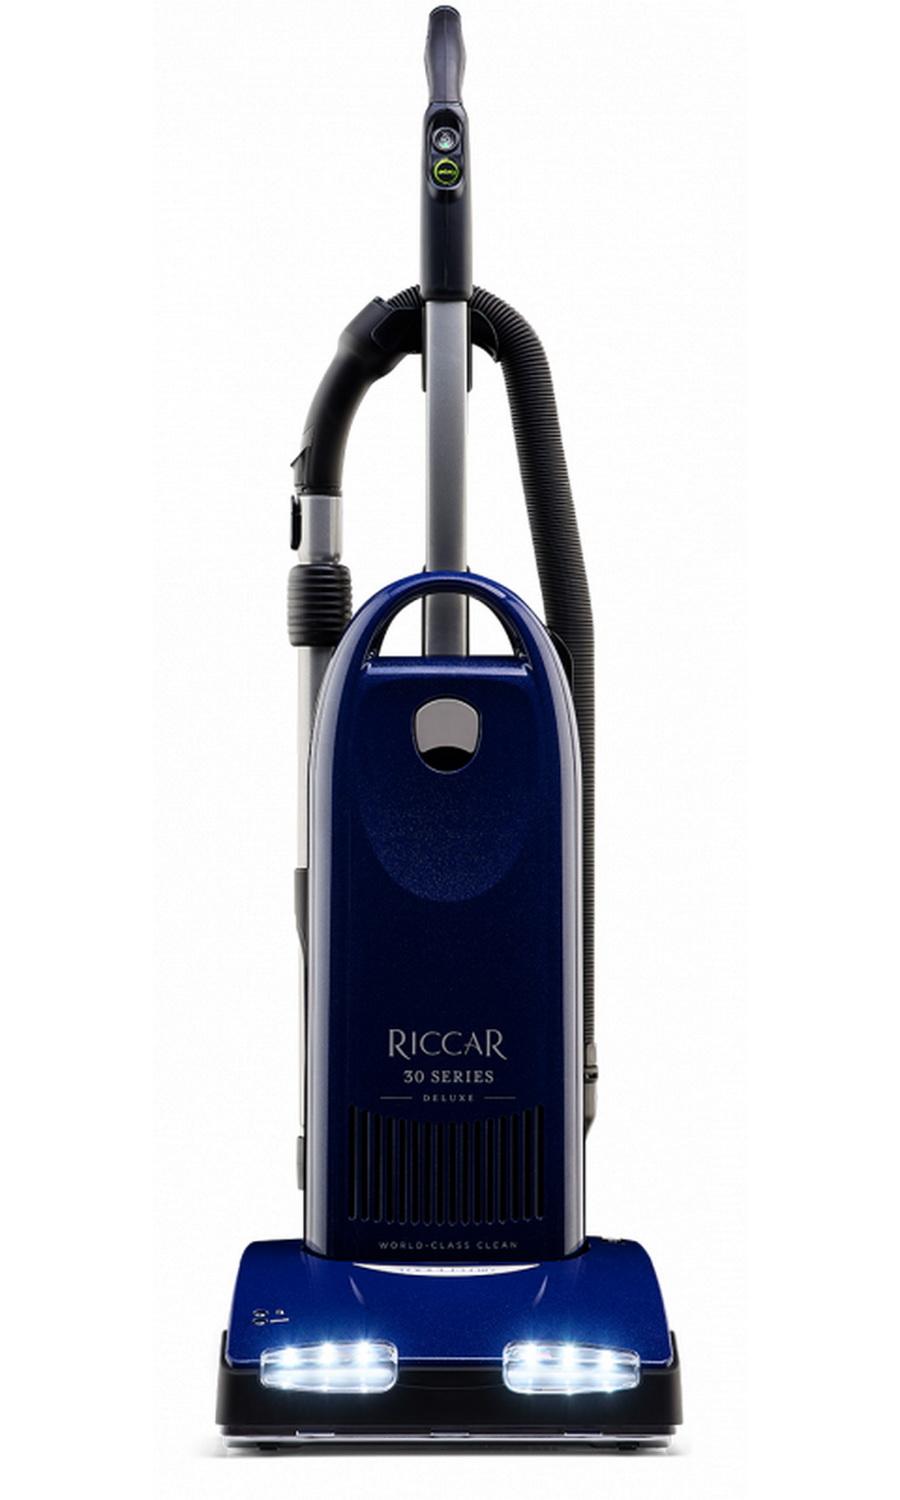 Riccar 30 Series Deluxe Upright Vacuum (R30D.4)